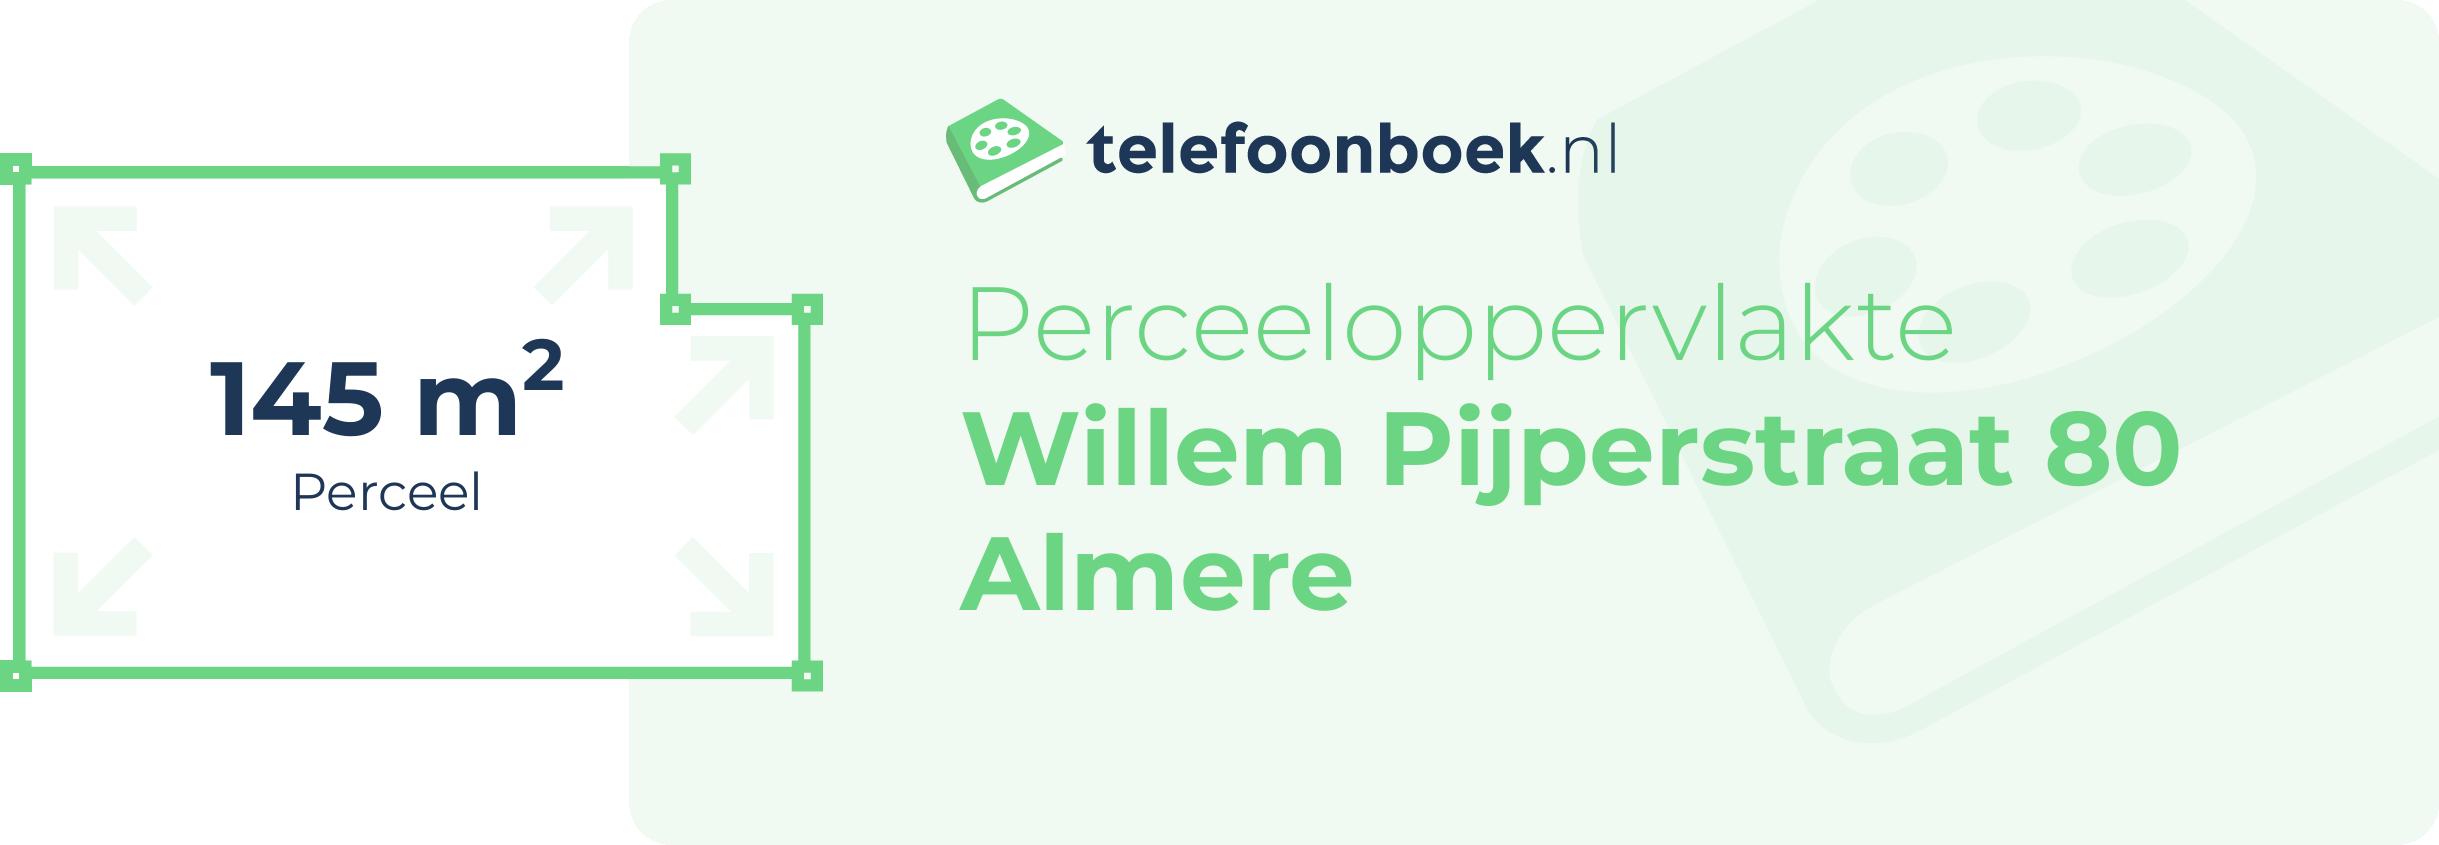 Perceeloppervlakte Willem Pijperstraat 80 Almere